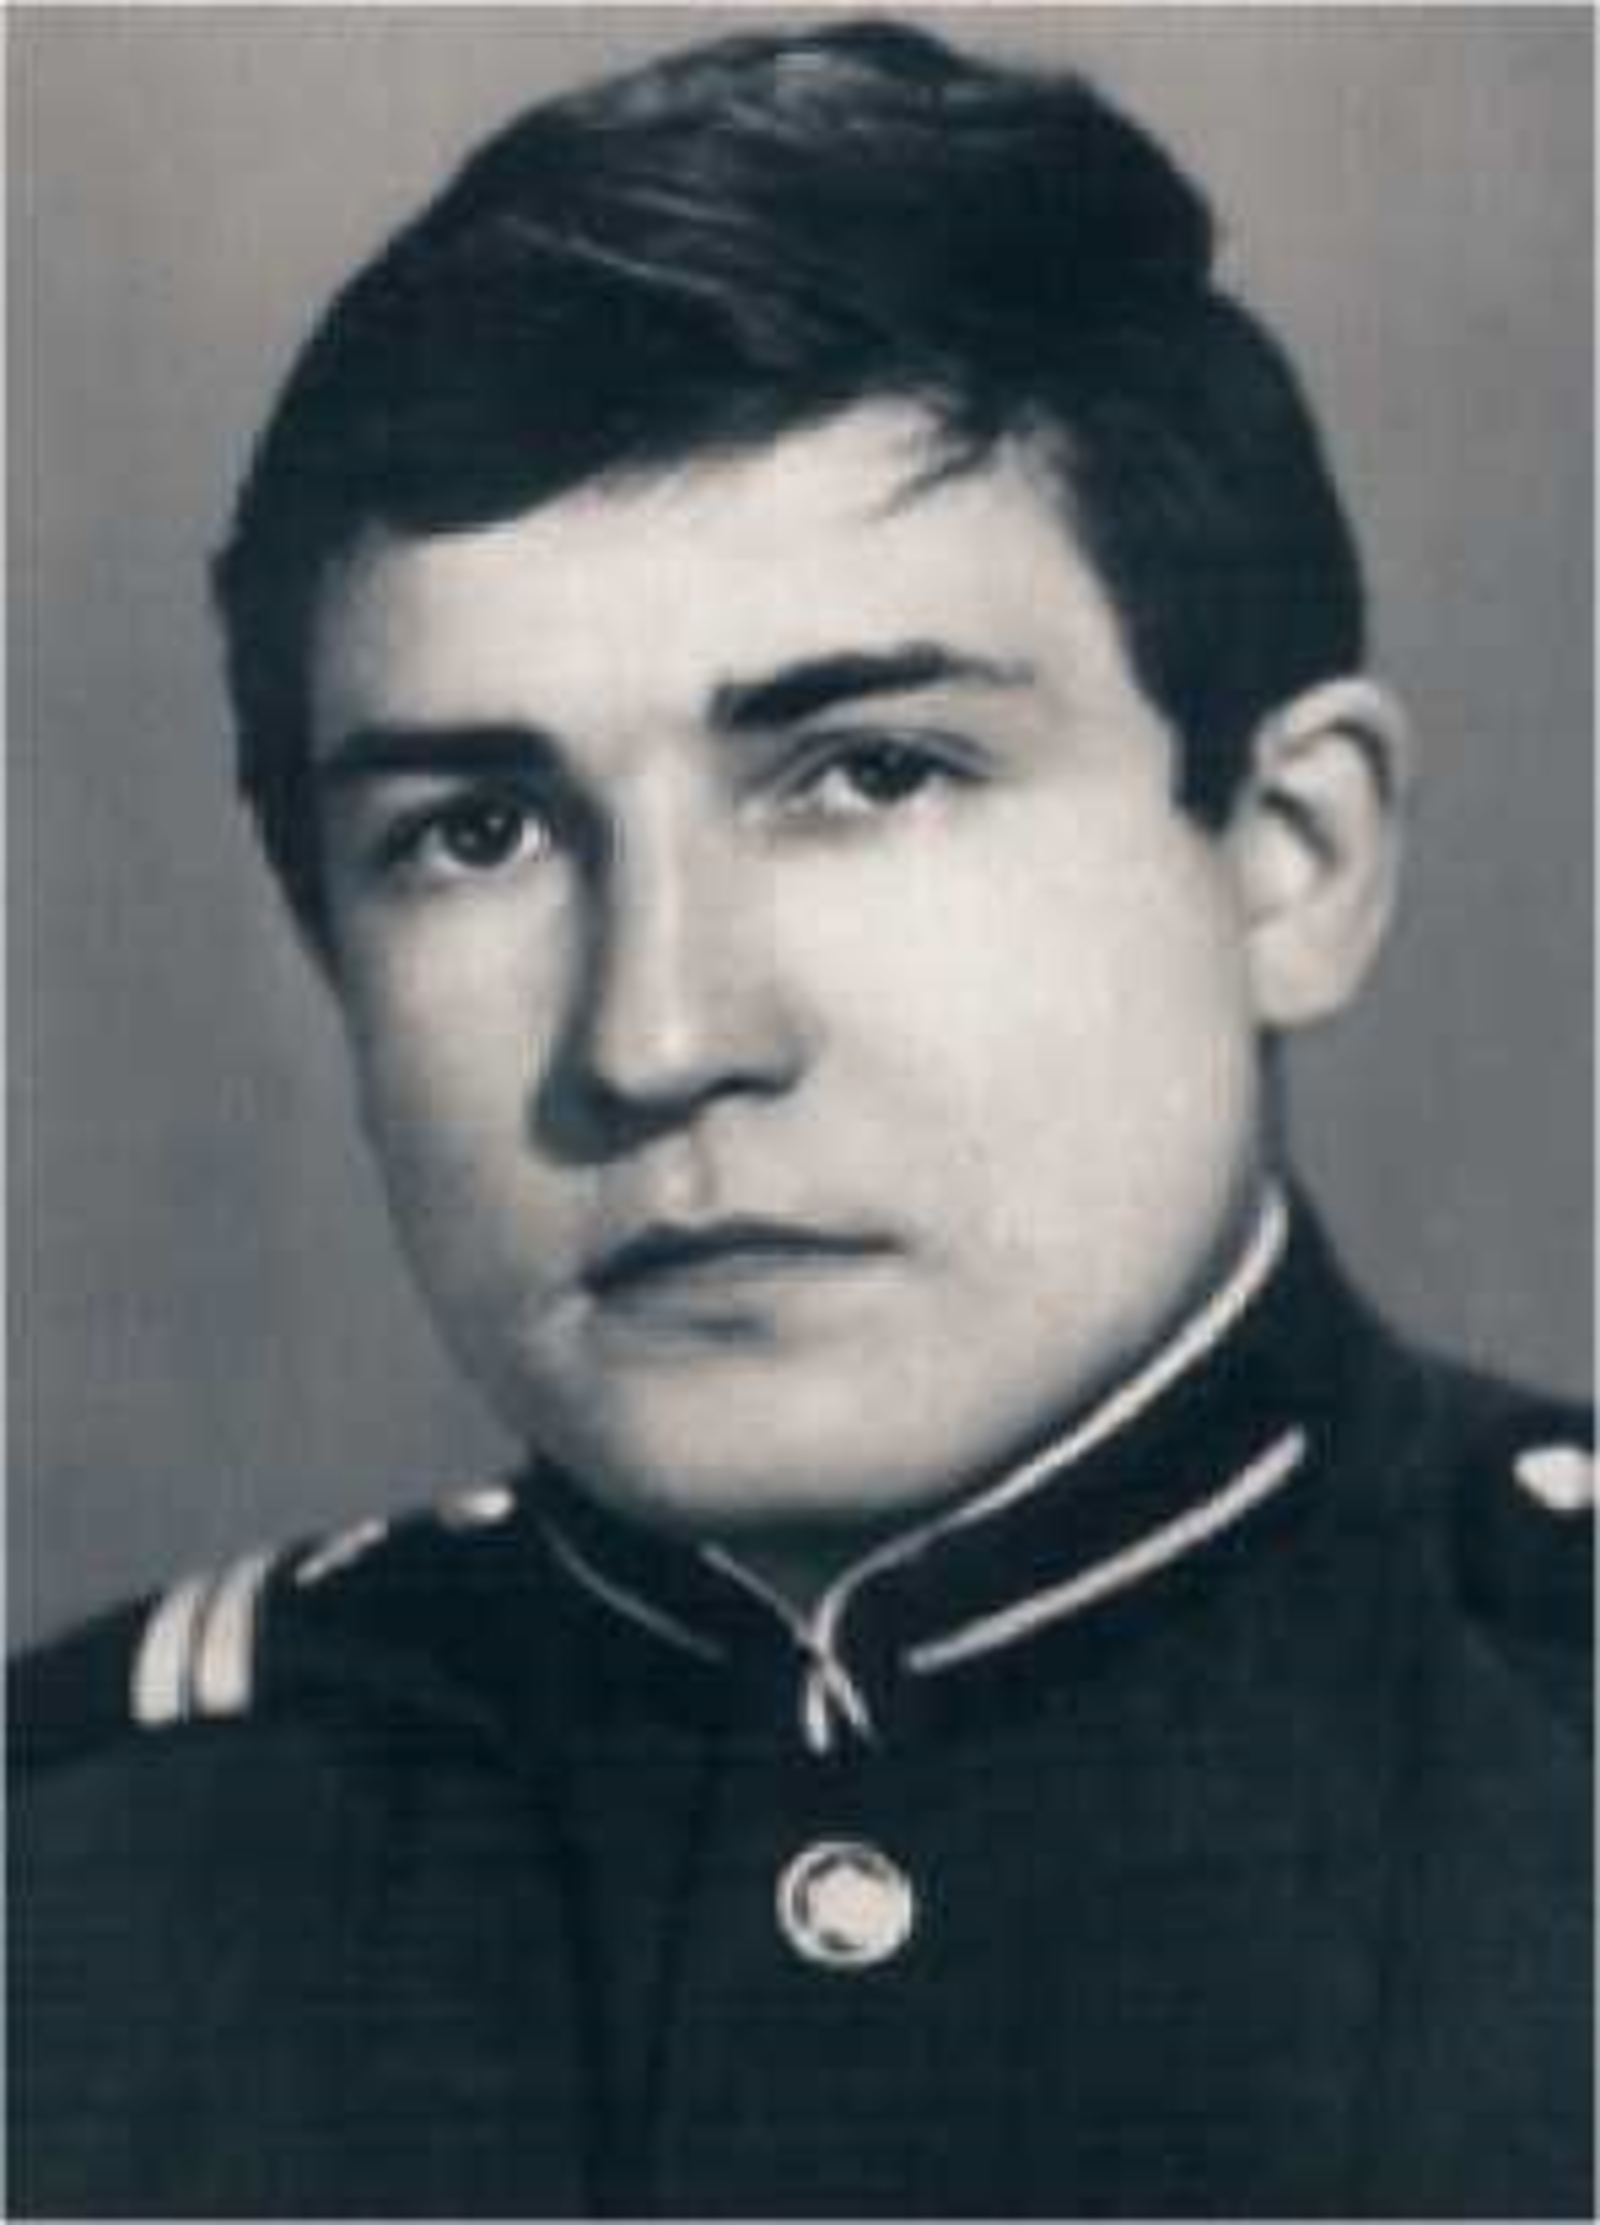 Младший сержант Аминев, 1965 г.